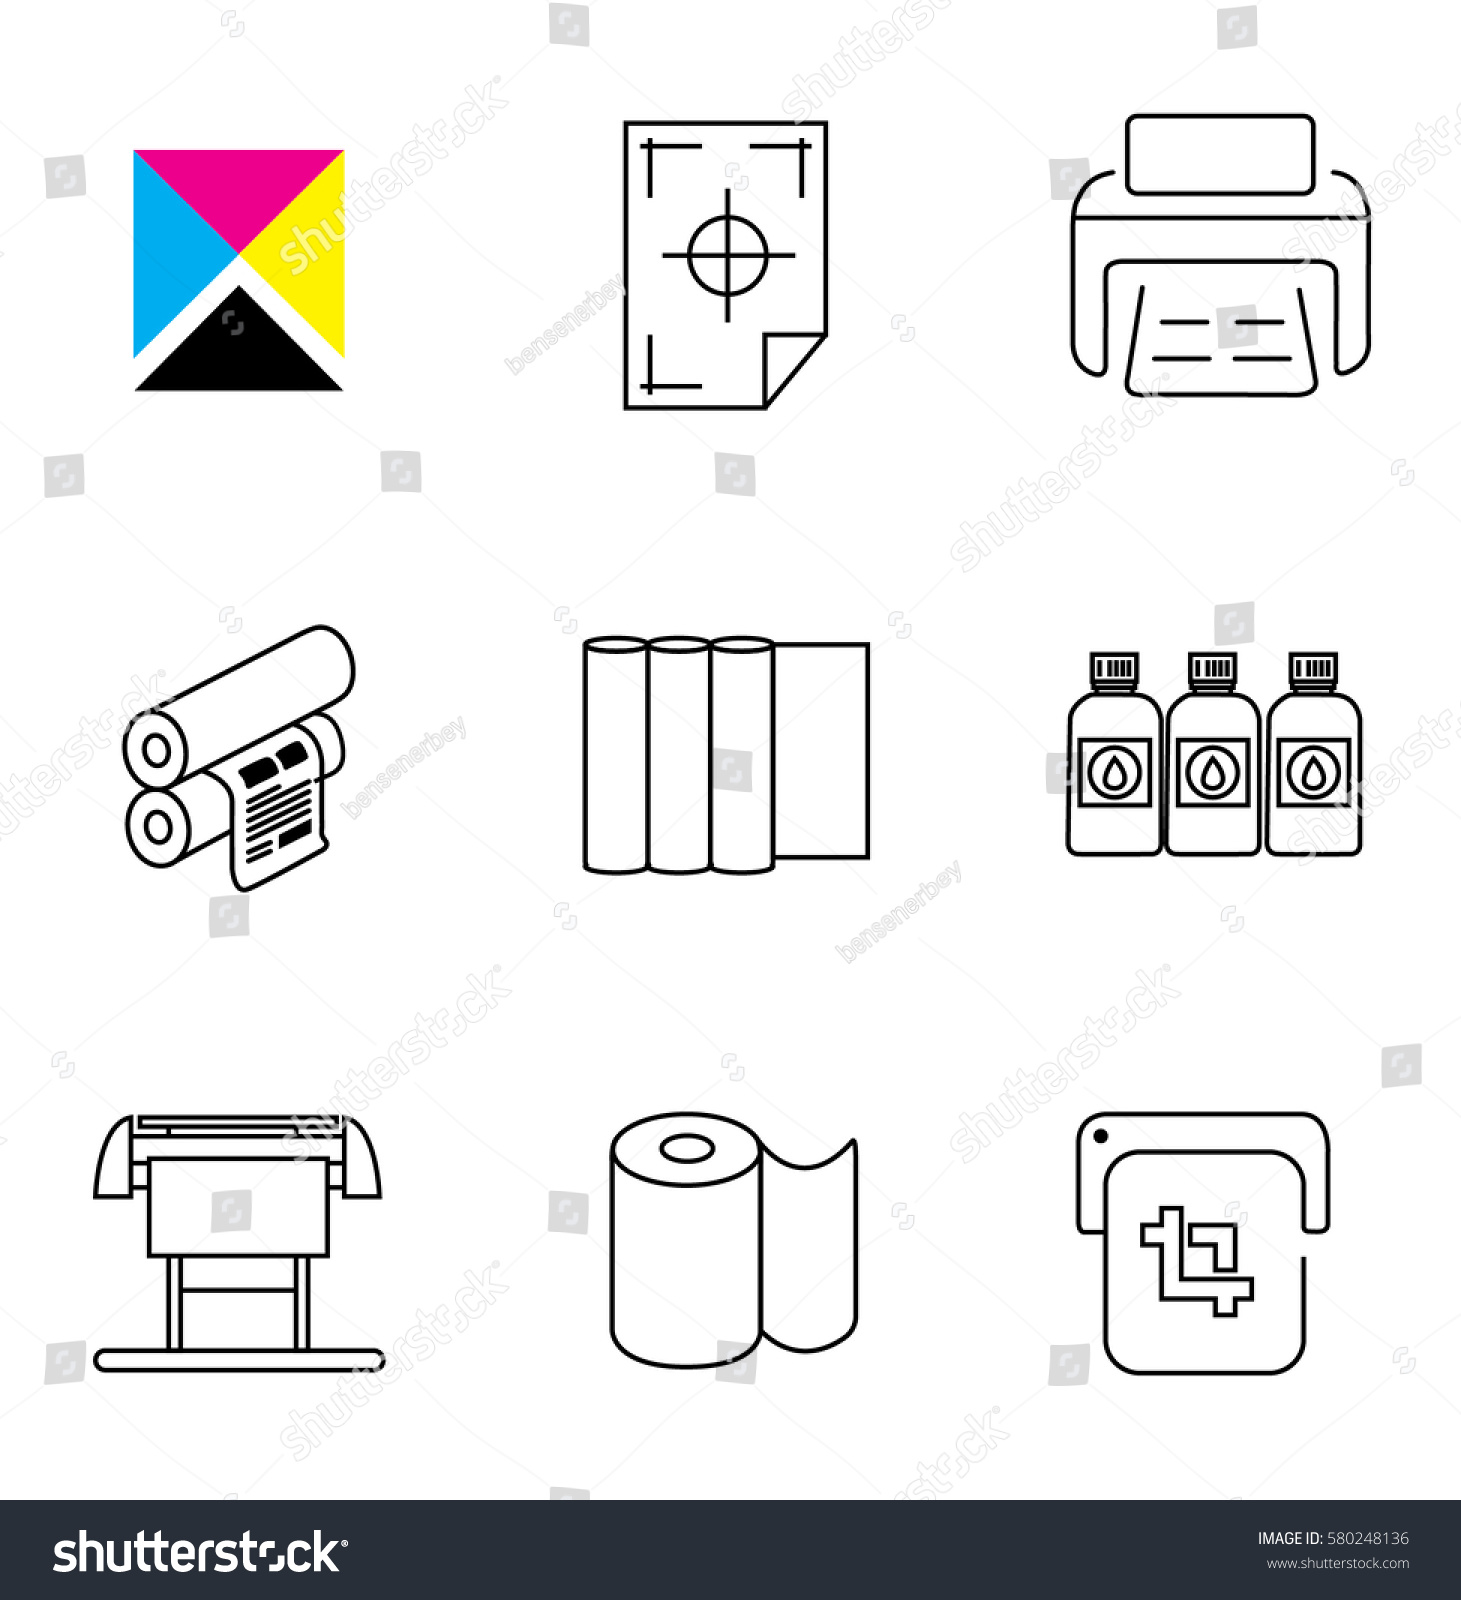 SVG of Print Shop and Digital Printing Icon Set svg